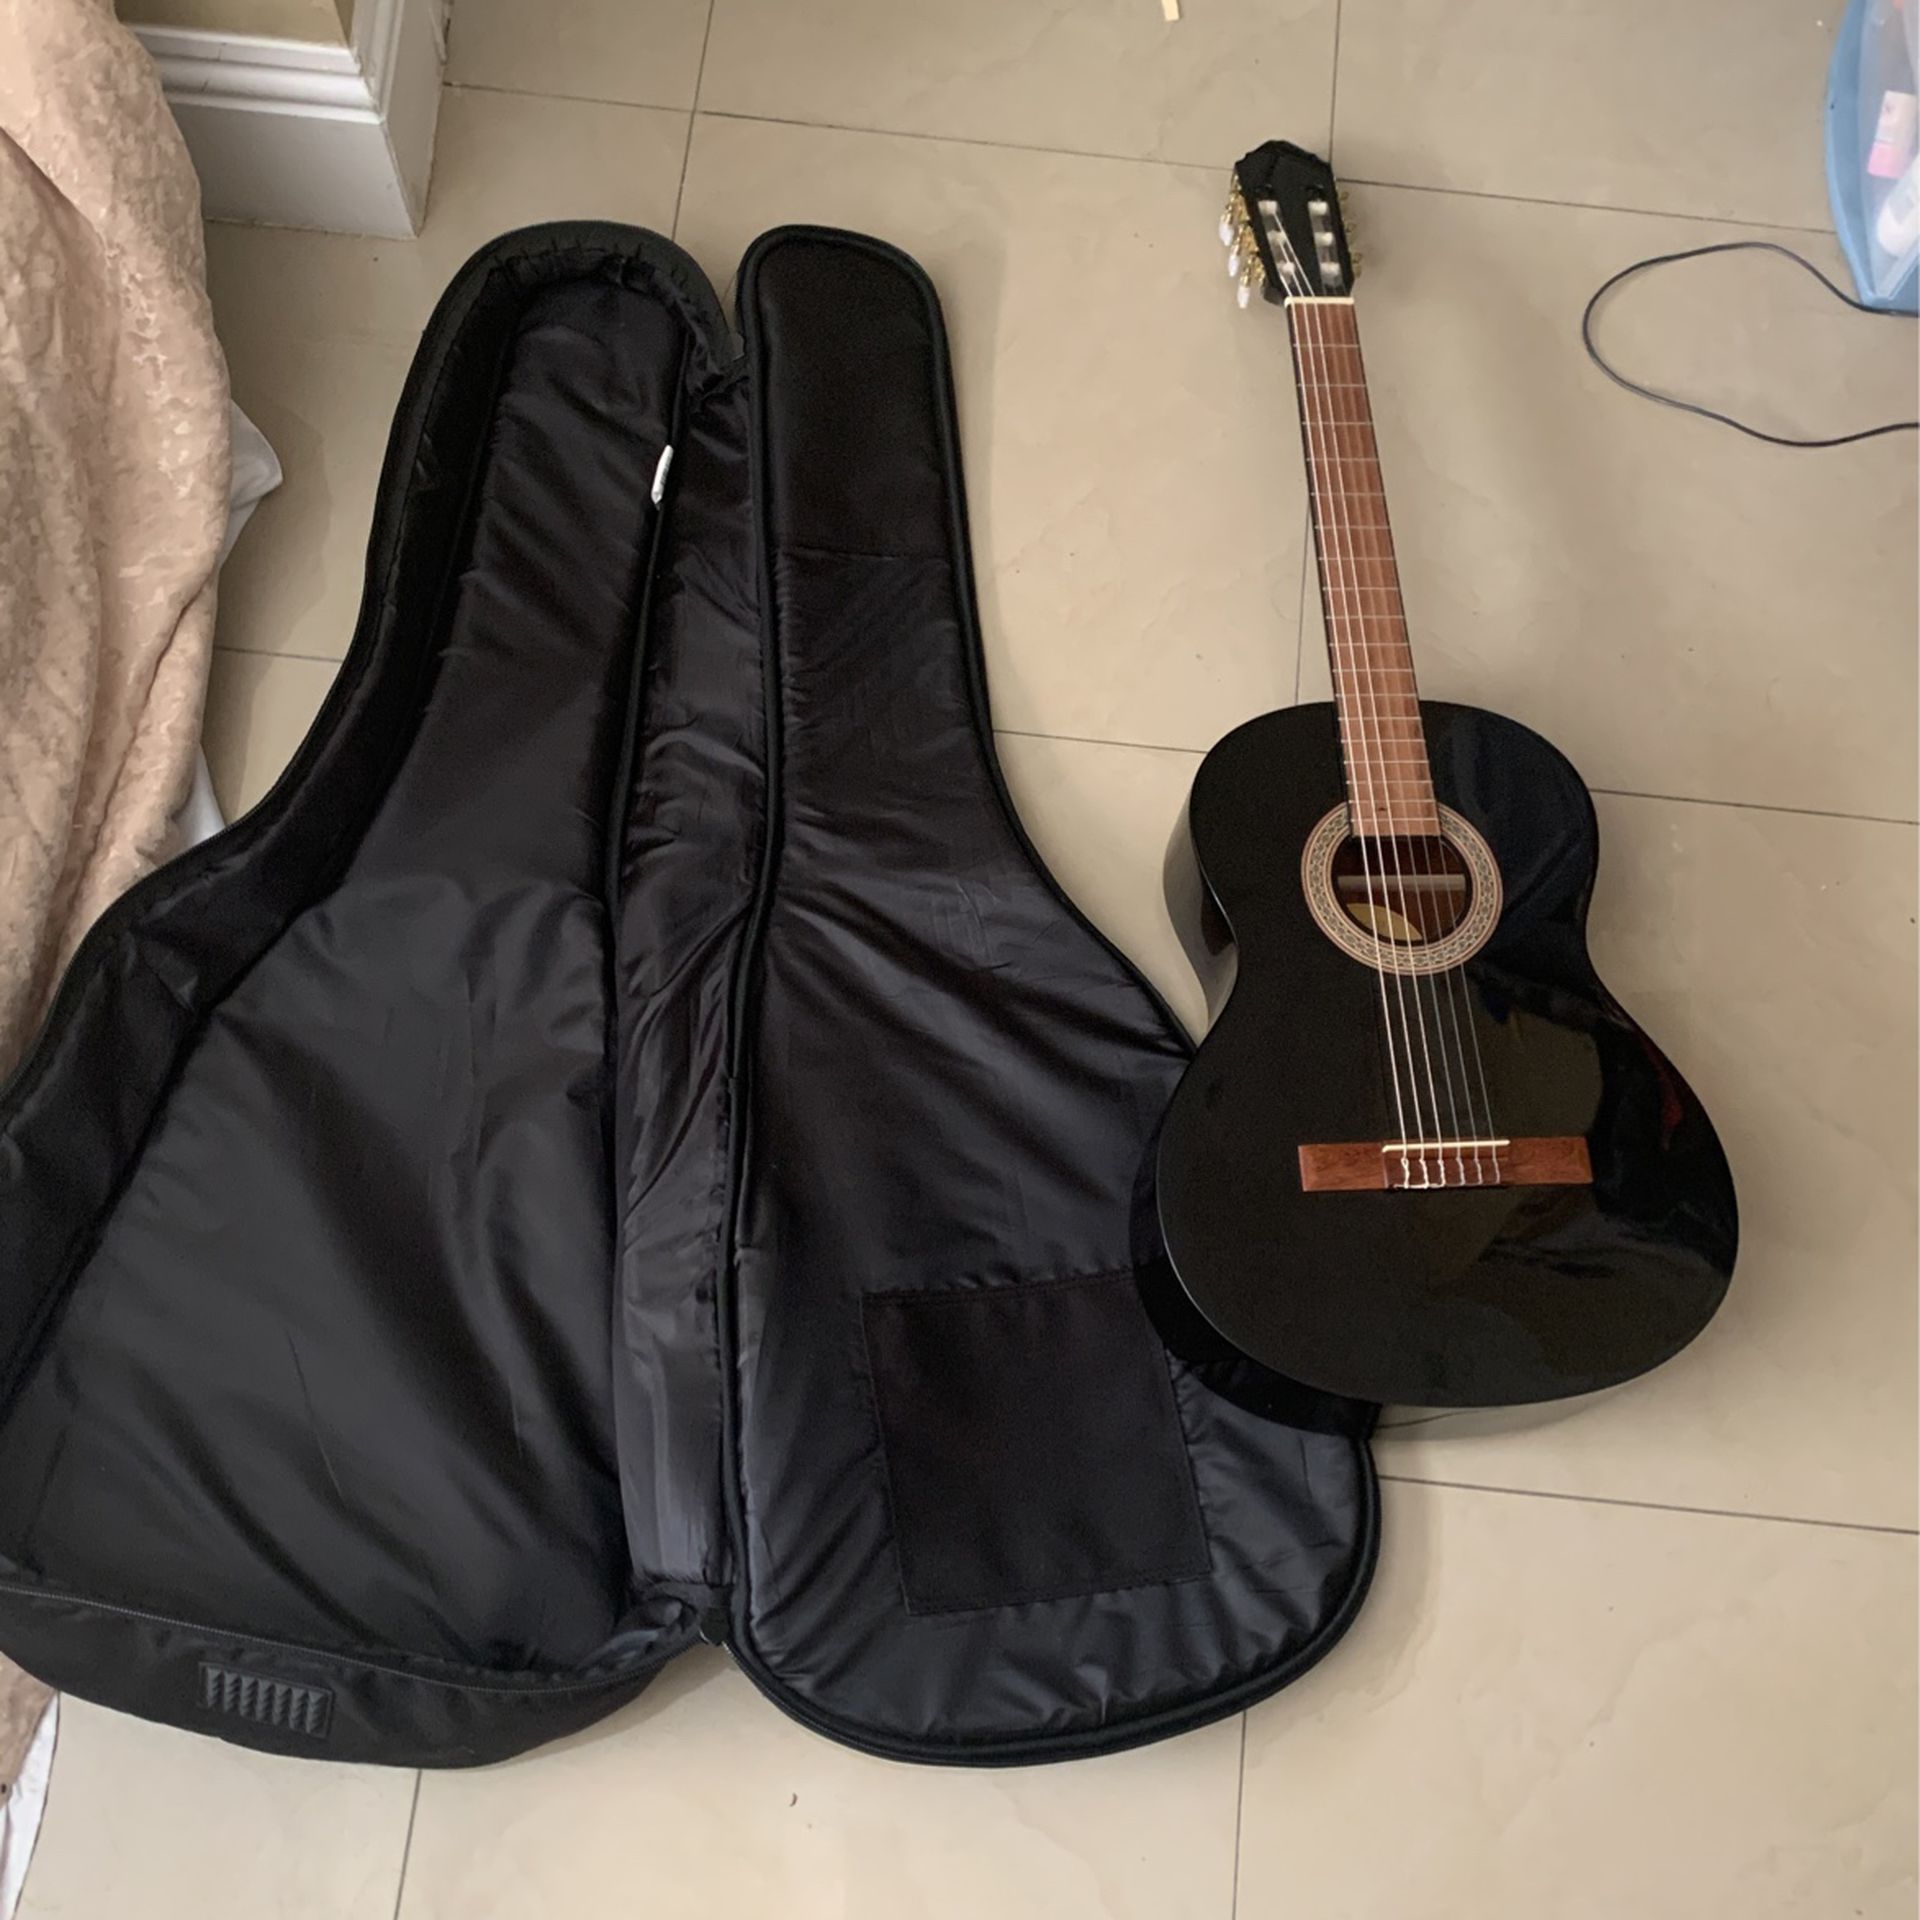 Lucero Acoustic Guitar And Roadrunner Case